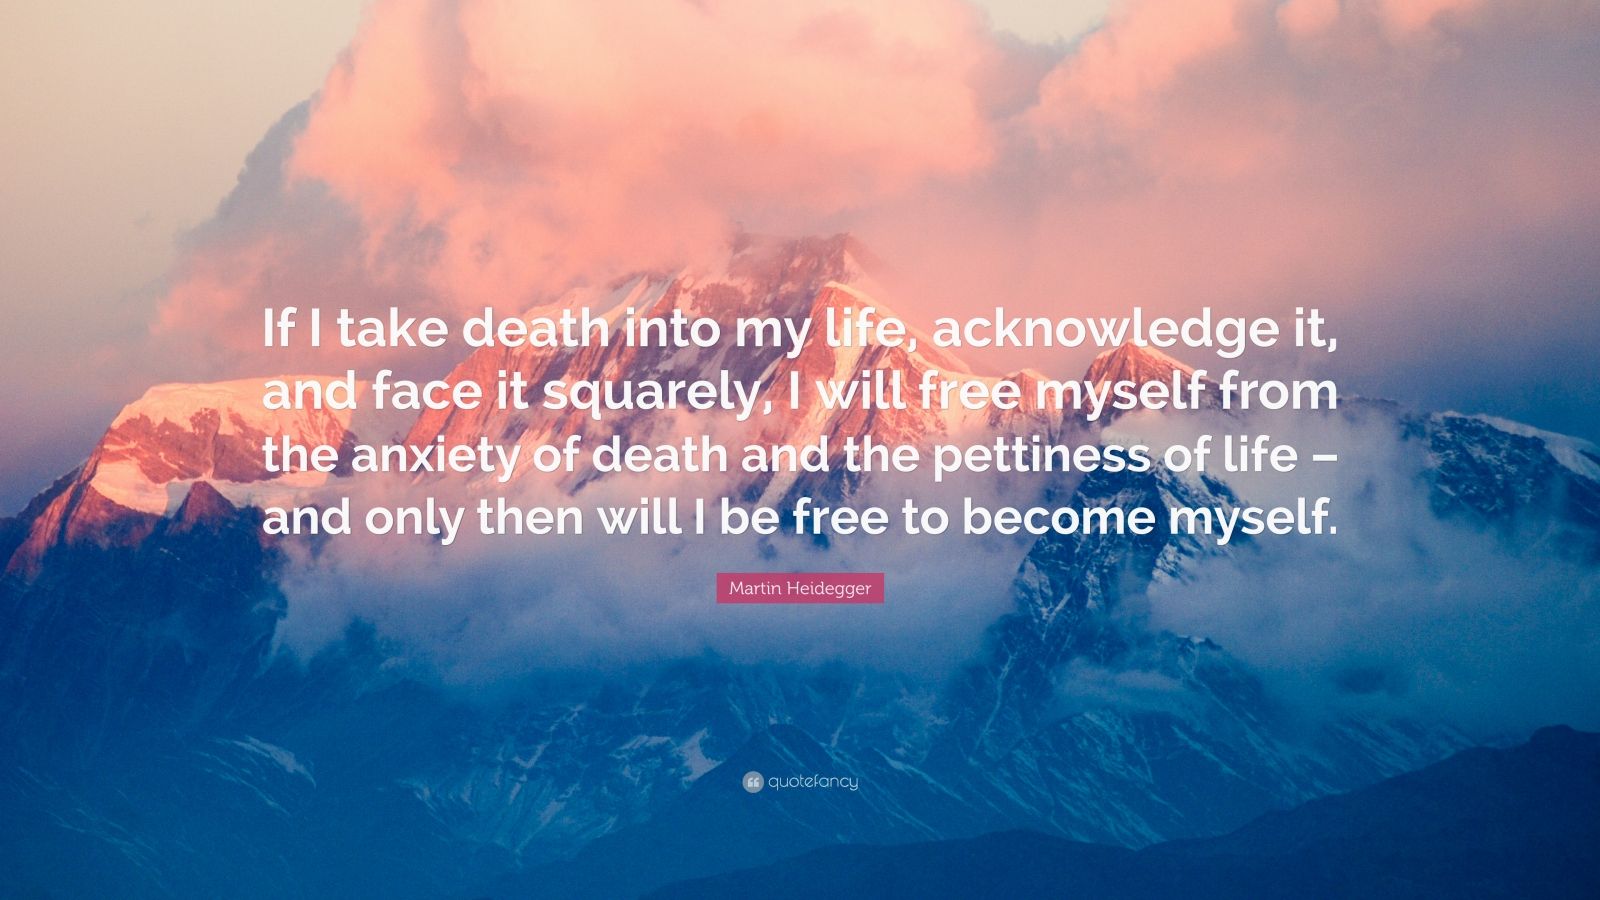 Martin Heidegger Quote: “If I take death into my life, acknowledge it ...